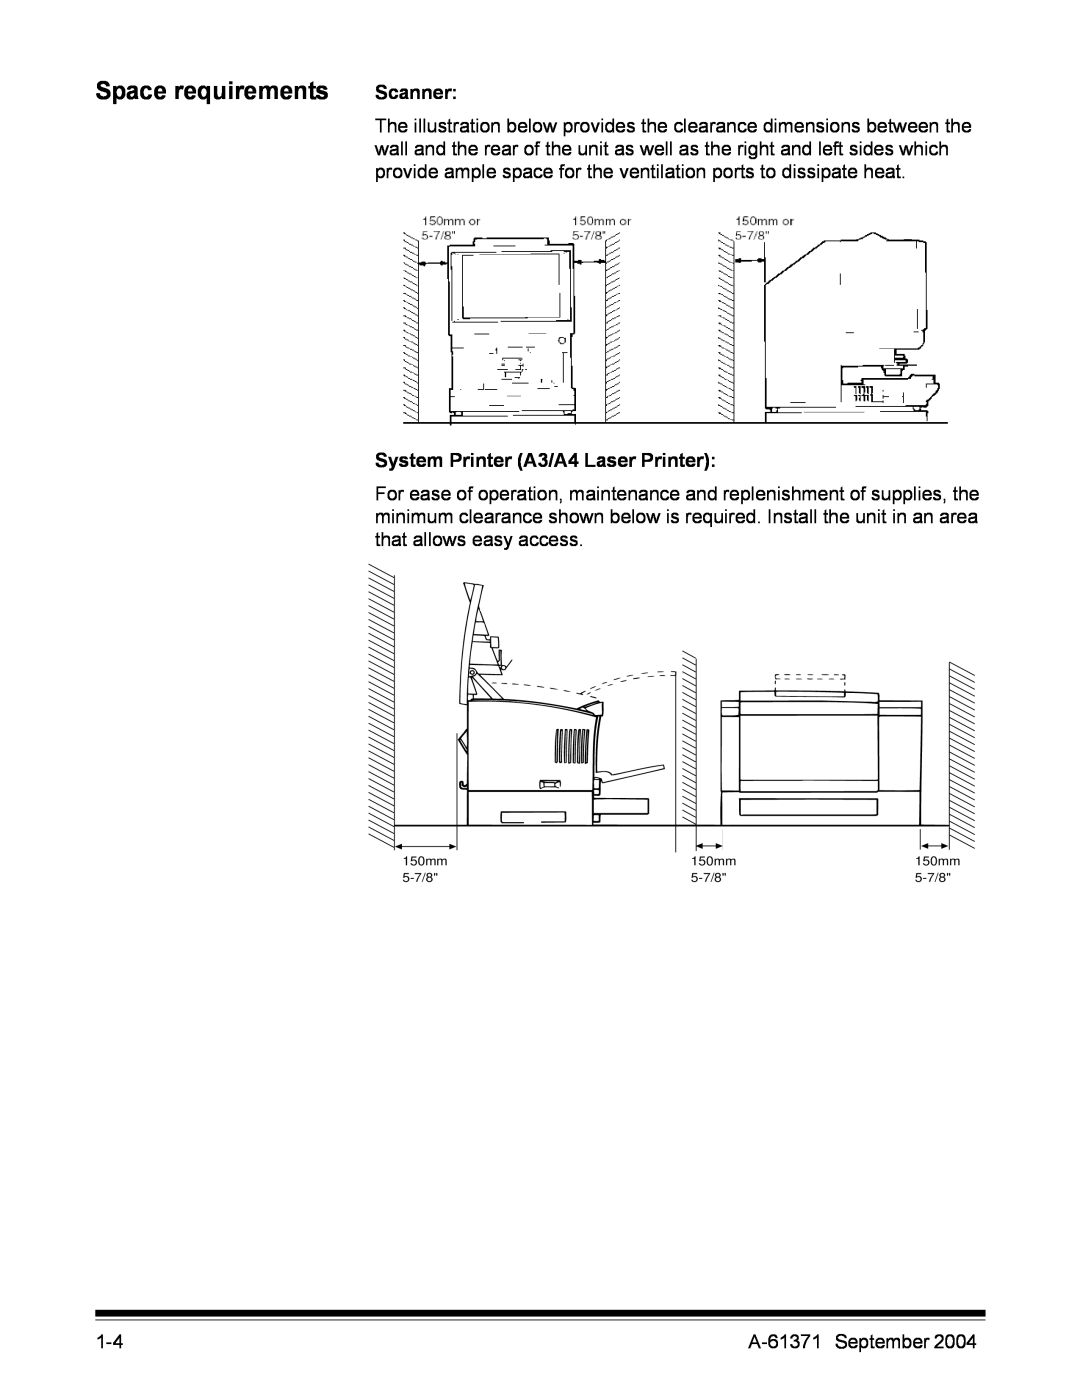 Kodak 3000DSV-E manual Space requirements, Scanner, System Printer A3/A4 Laser Printer 